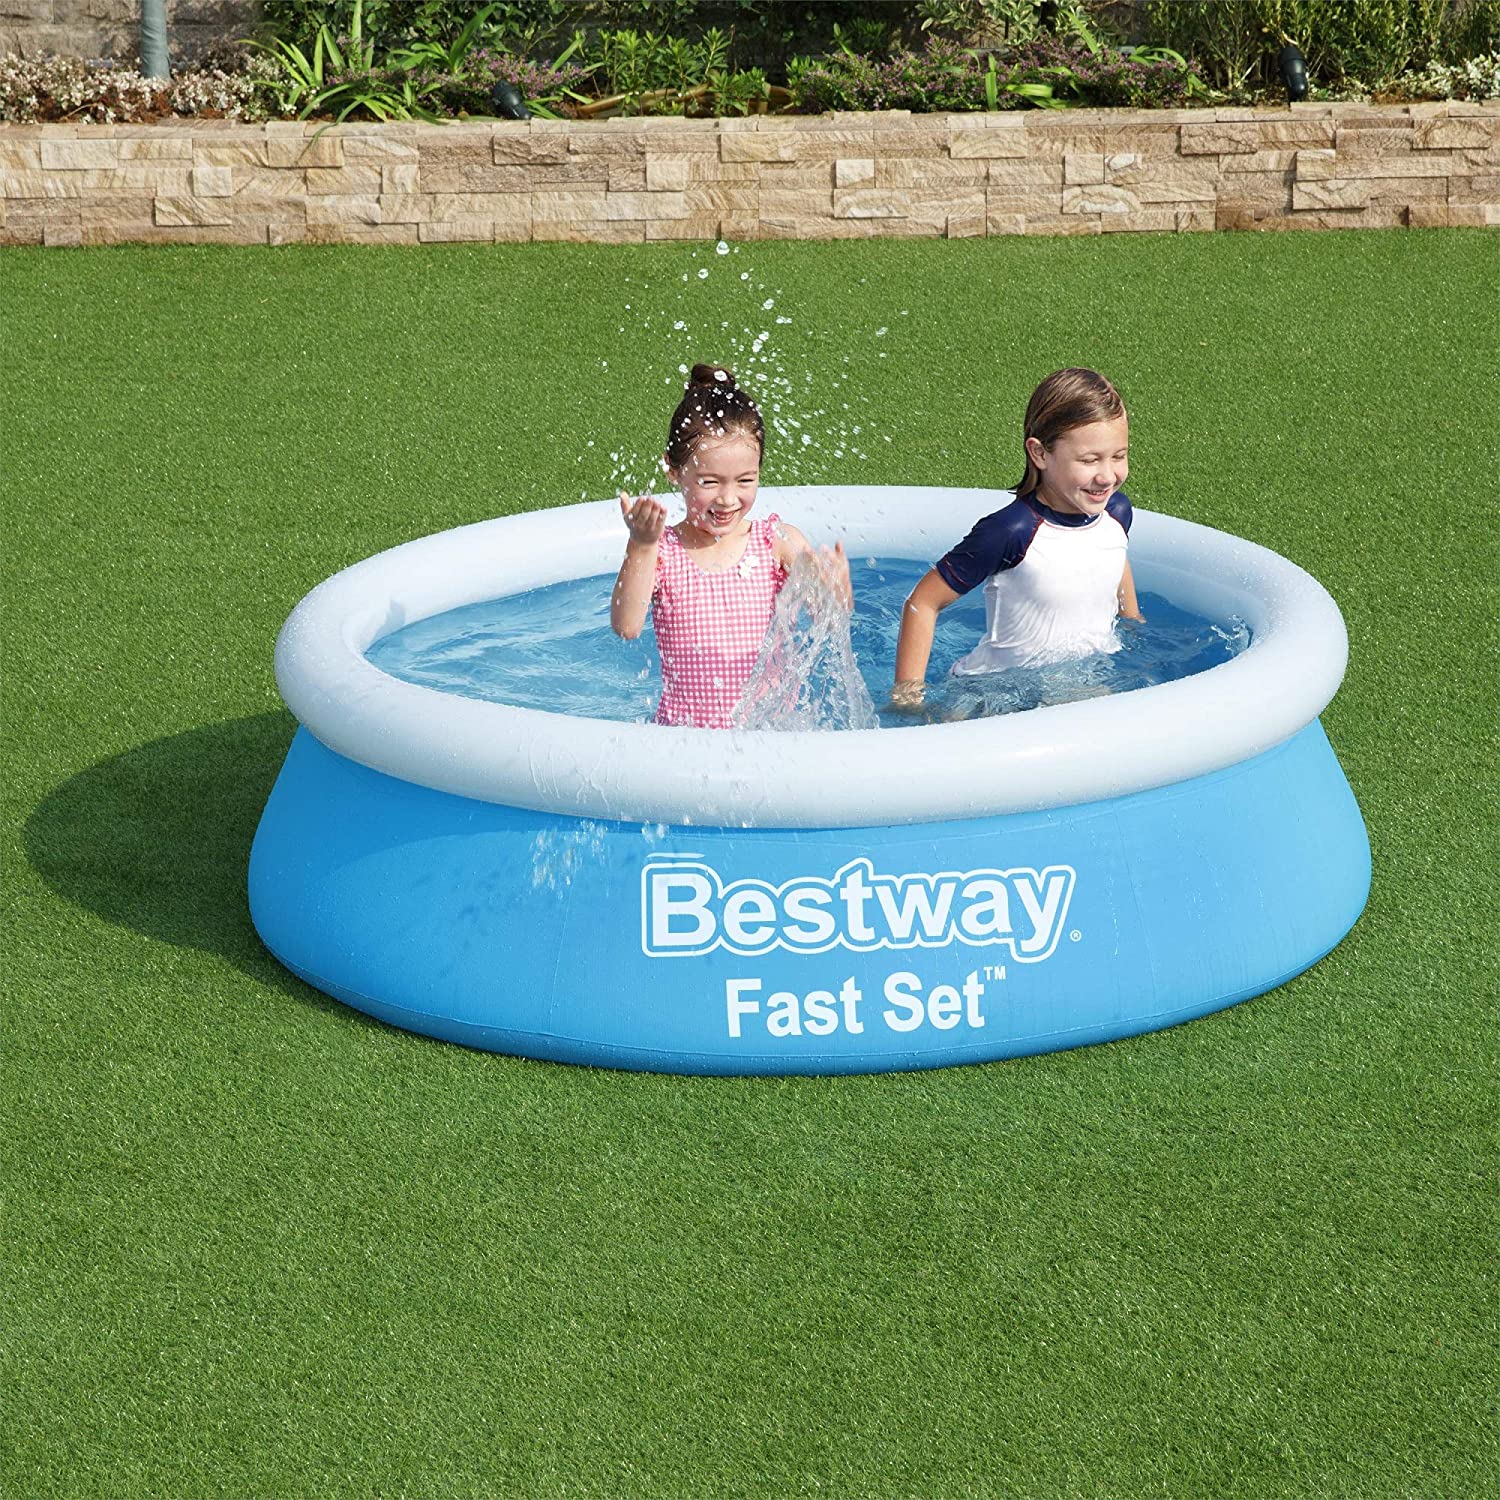 Bestway Inflatable Swimming Pool, Round, 1.83m×51cm, blue, 57392